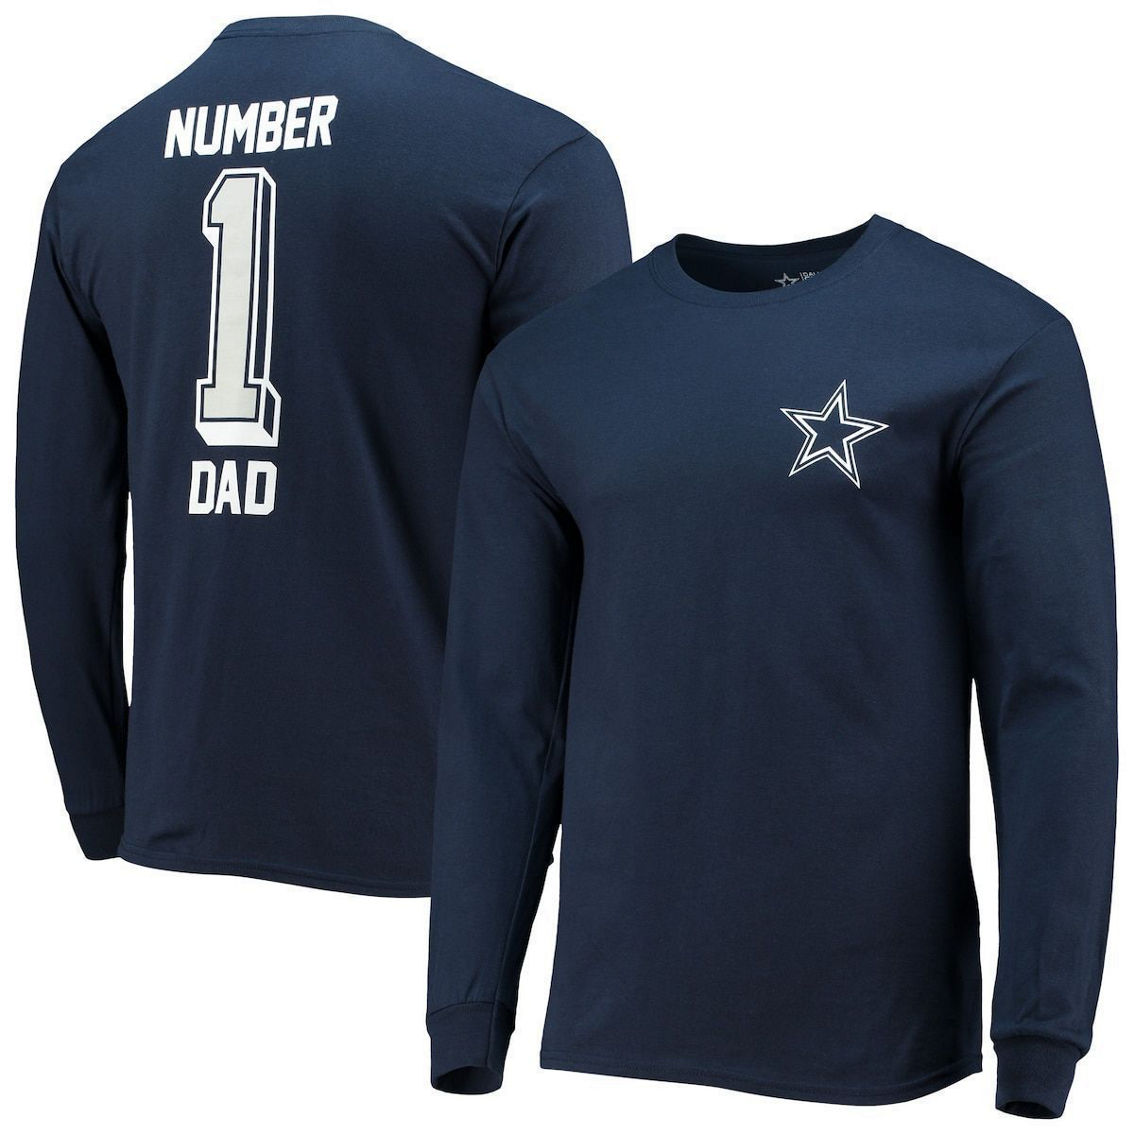 Fanatics Men's Fanatics Navy Dallas Cowboys #1 Dad Long Sleeve T-Shirt - Image 2 of 4